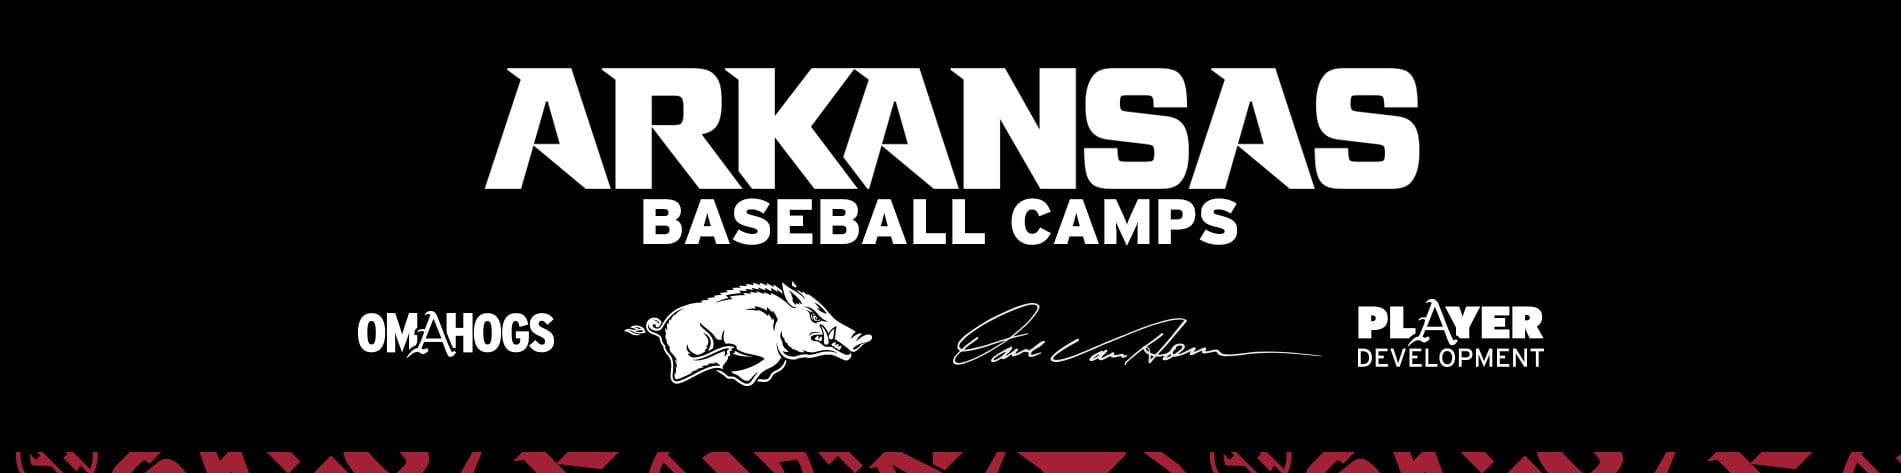 Arkansas Baseball Camps Header